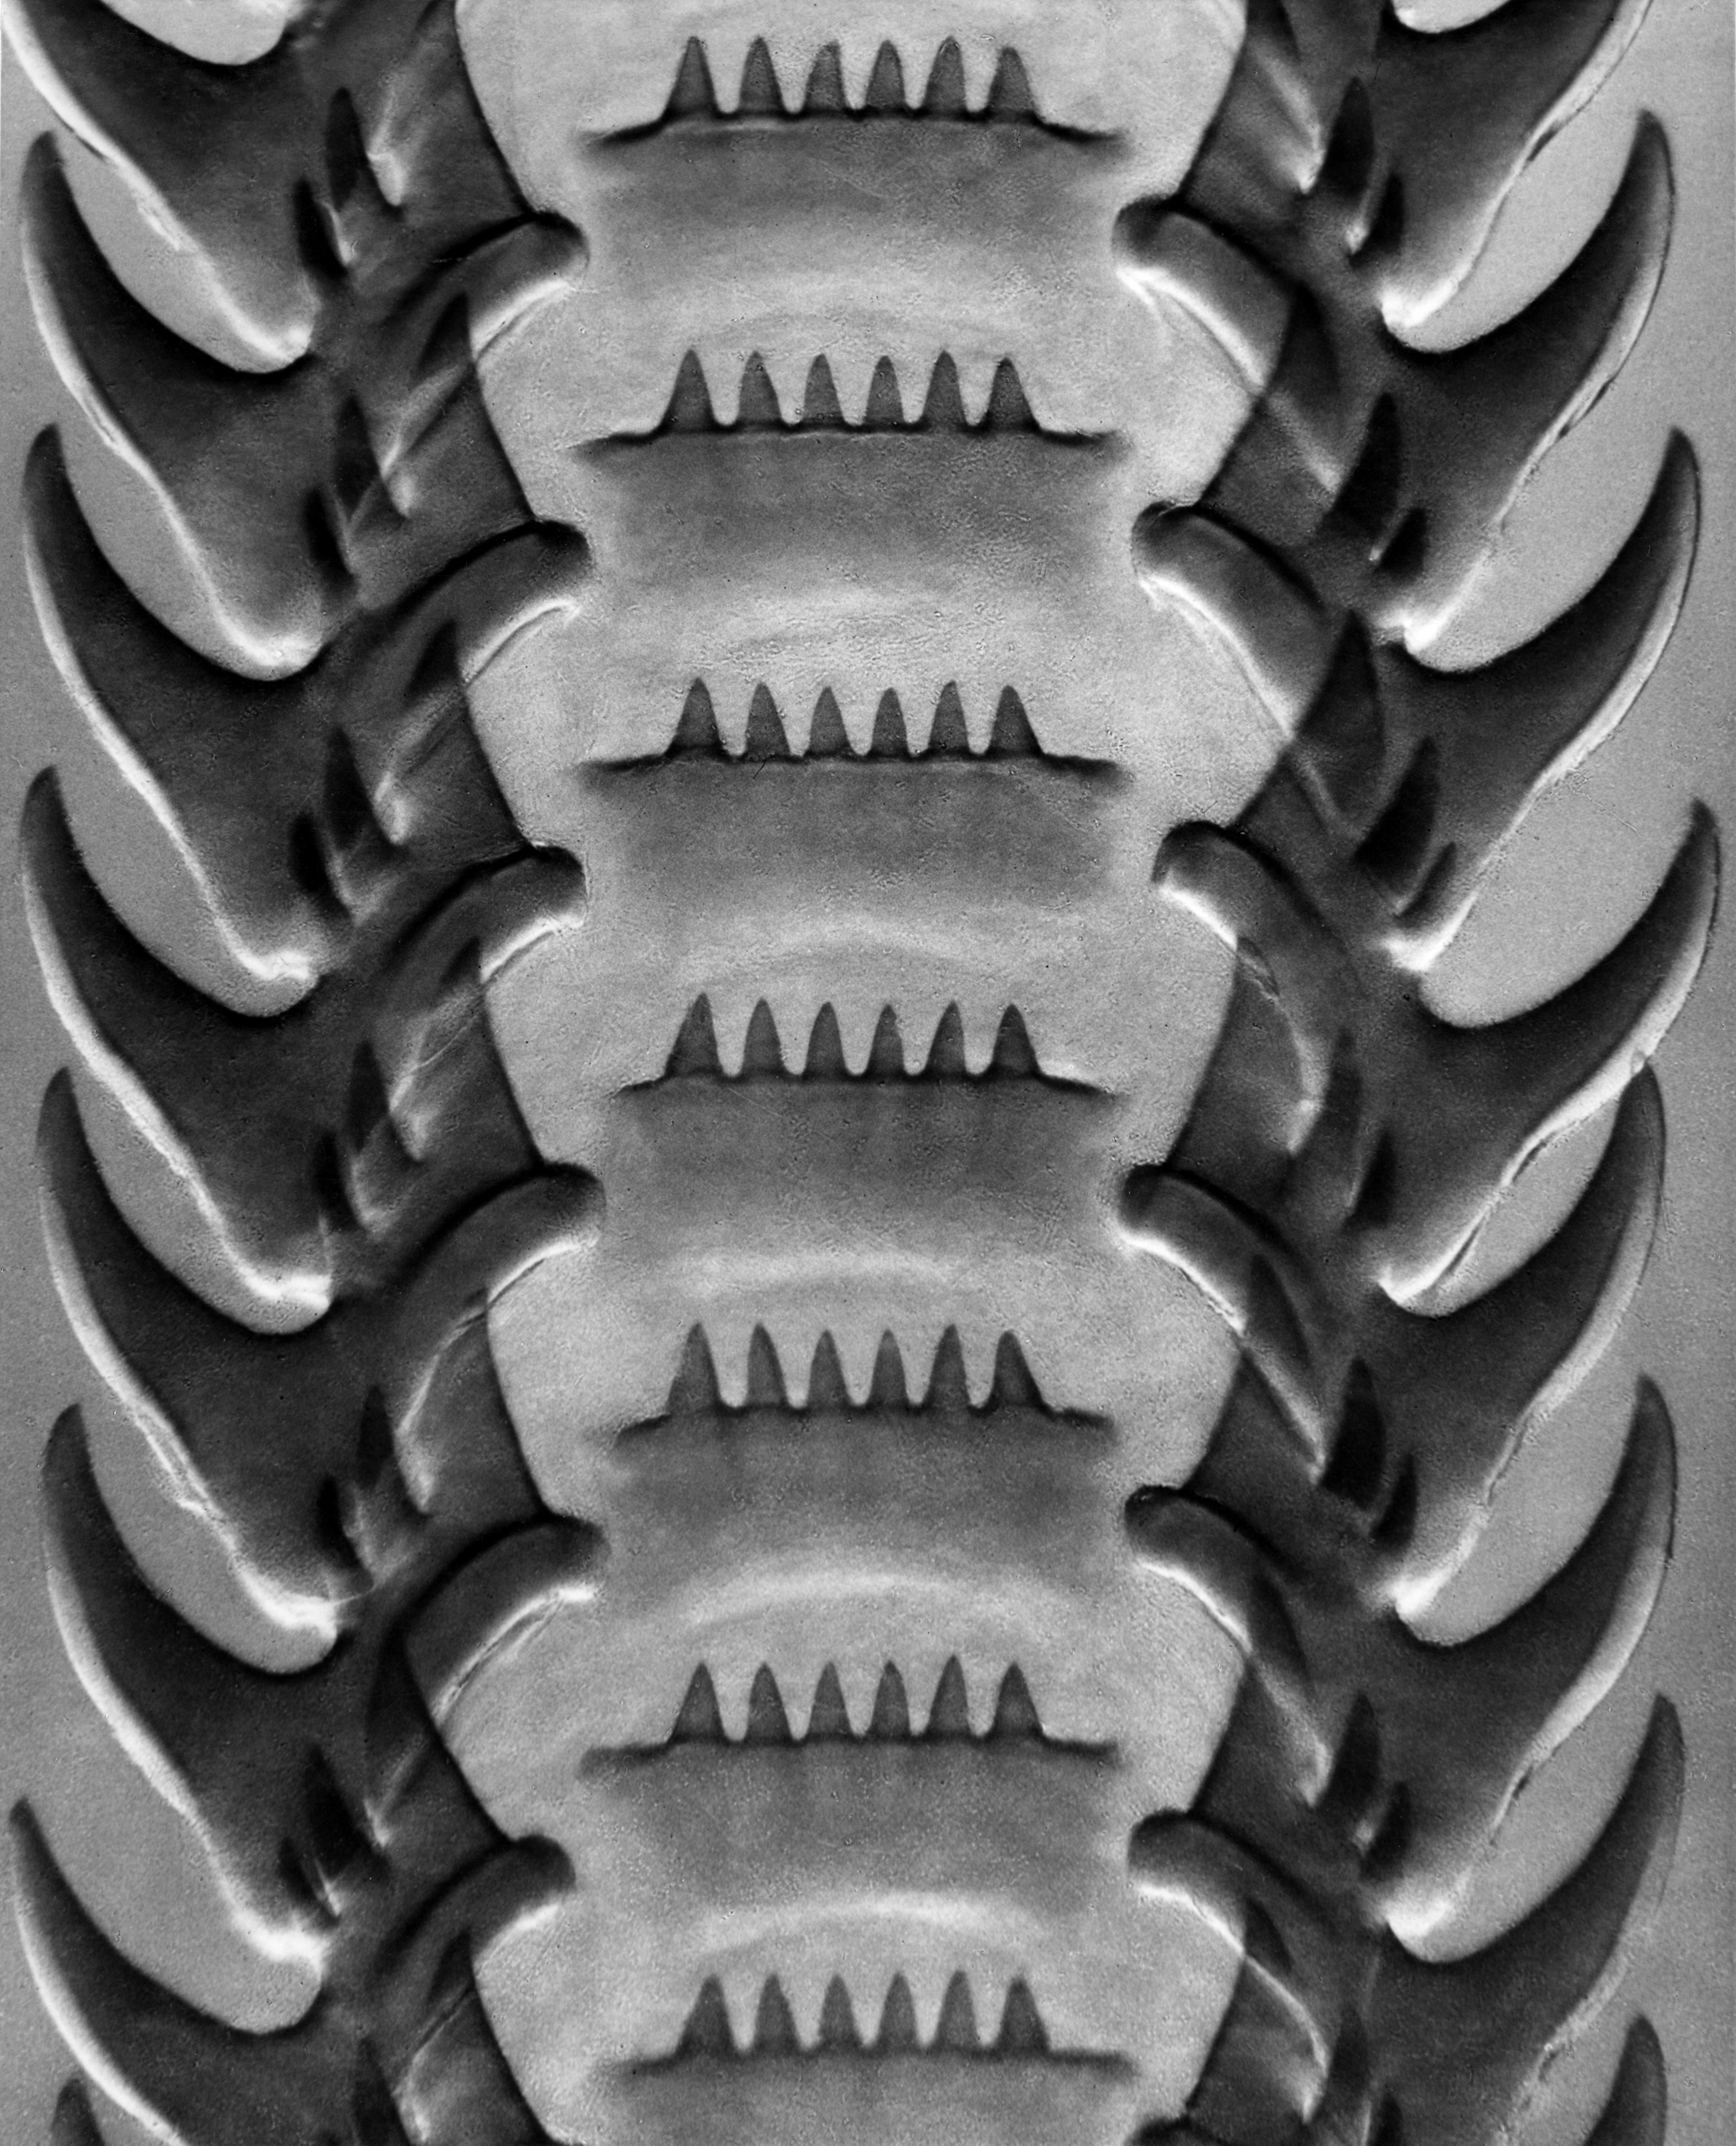 Snail's Tongue as Regular Rasp (Nassa), 1928